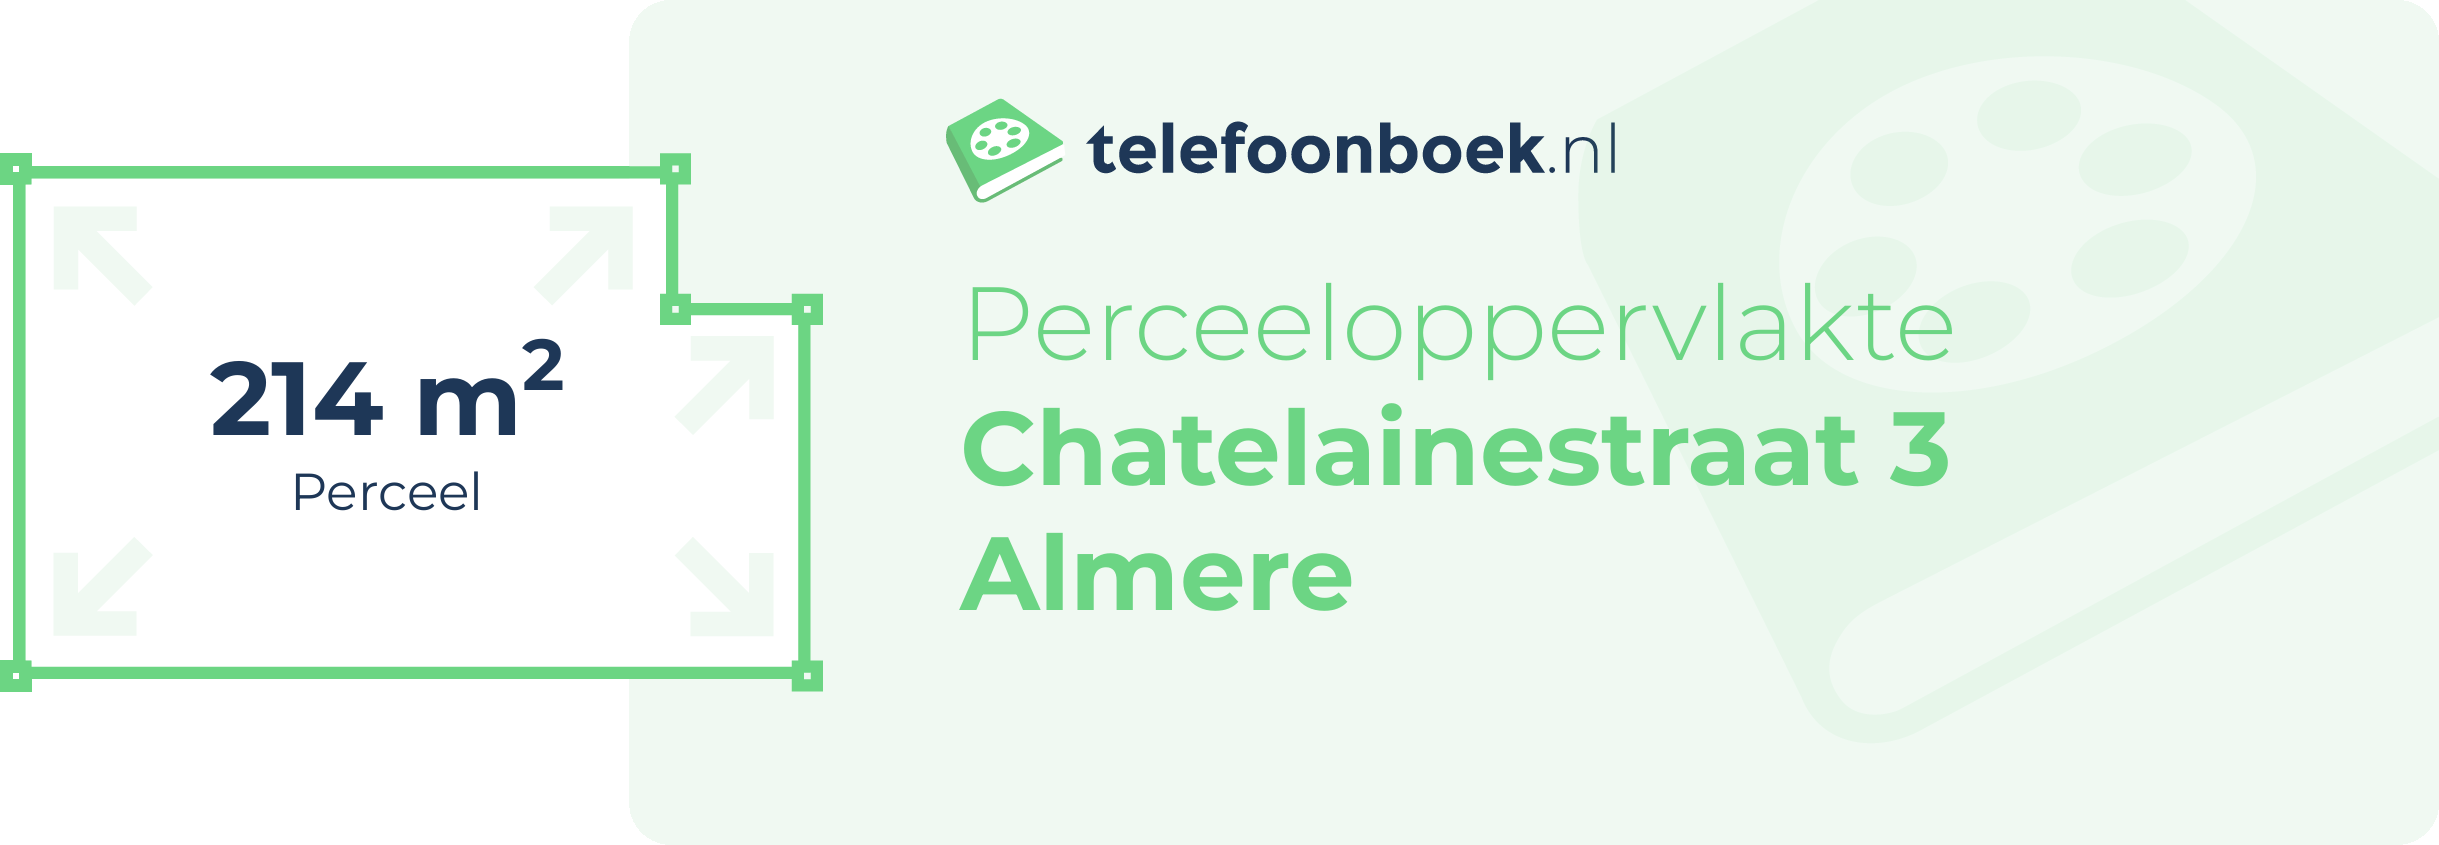 Perceeloppervlakte Chatelainestraat 3 Almere